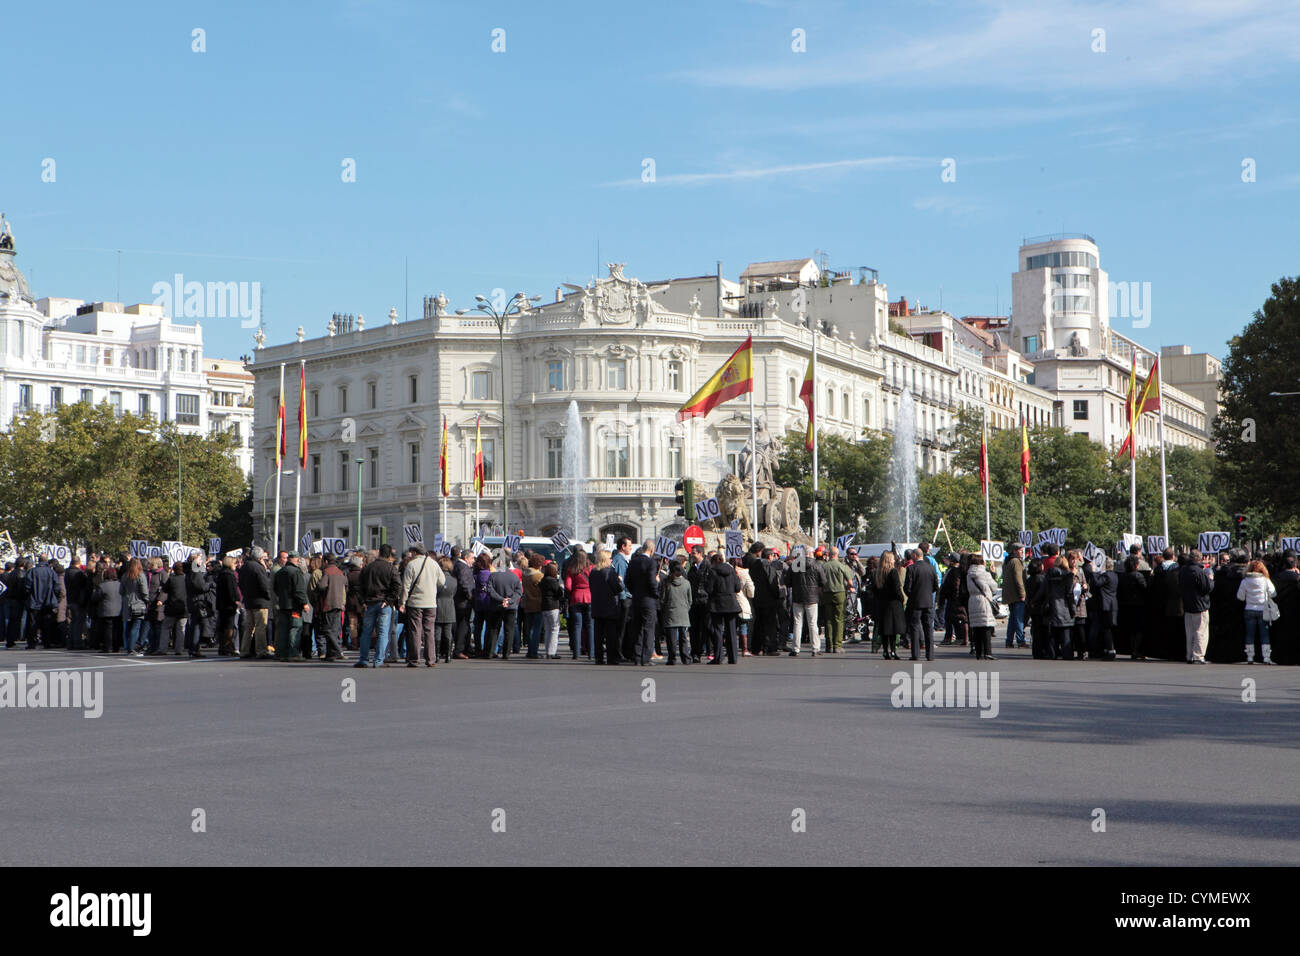 Anti austerity protesters No public sector cuts cutbacks, Plaza de Cibeles, Madrid, Spain Stock Photo